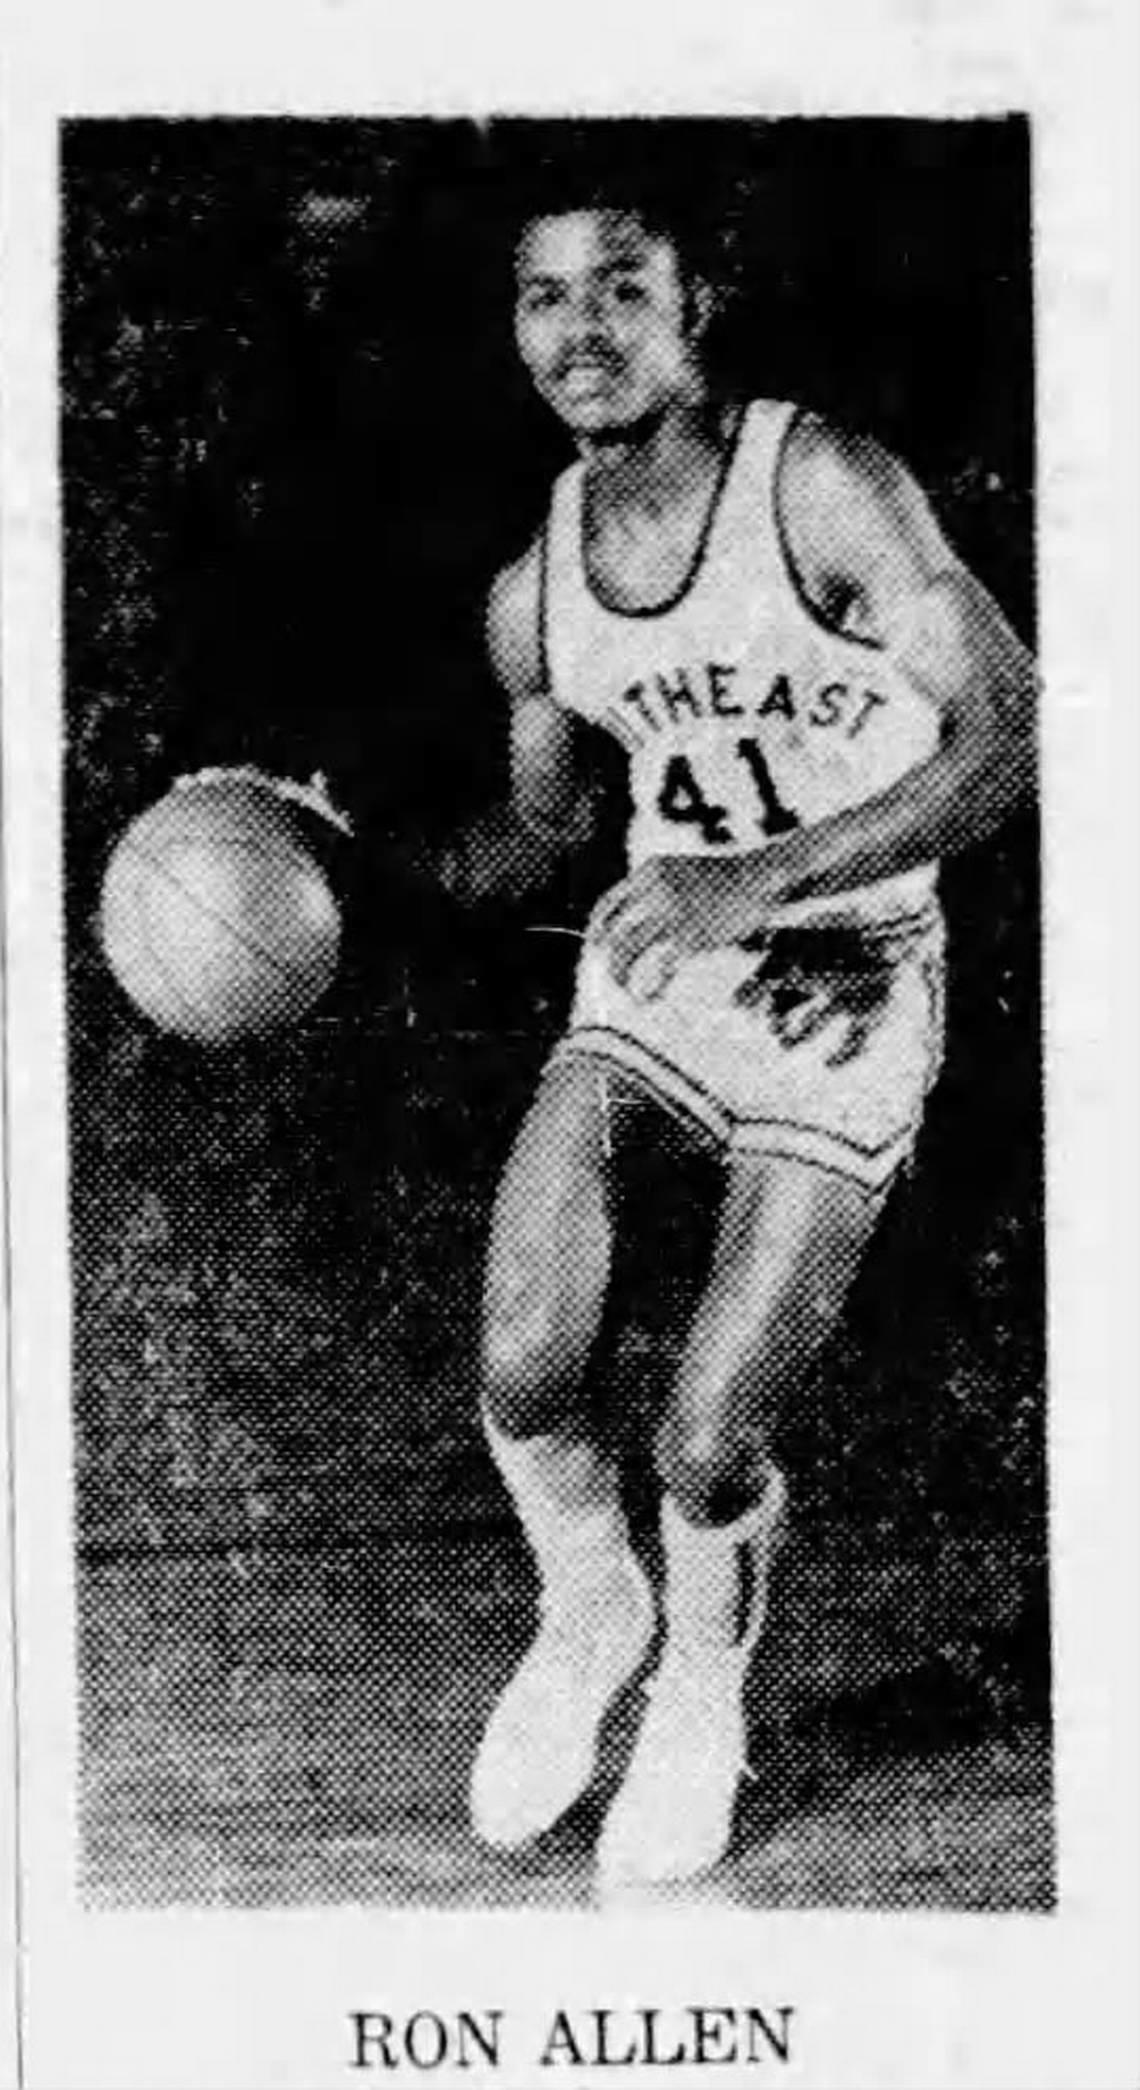 Ron Allen as a senior on the Southeast high school basketball team in 1970.